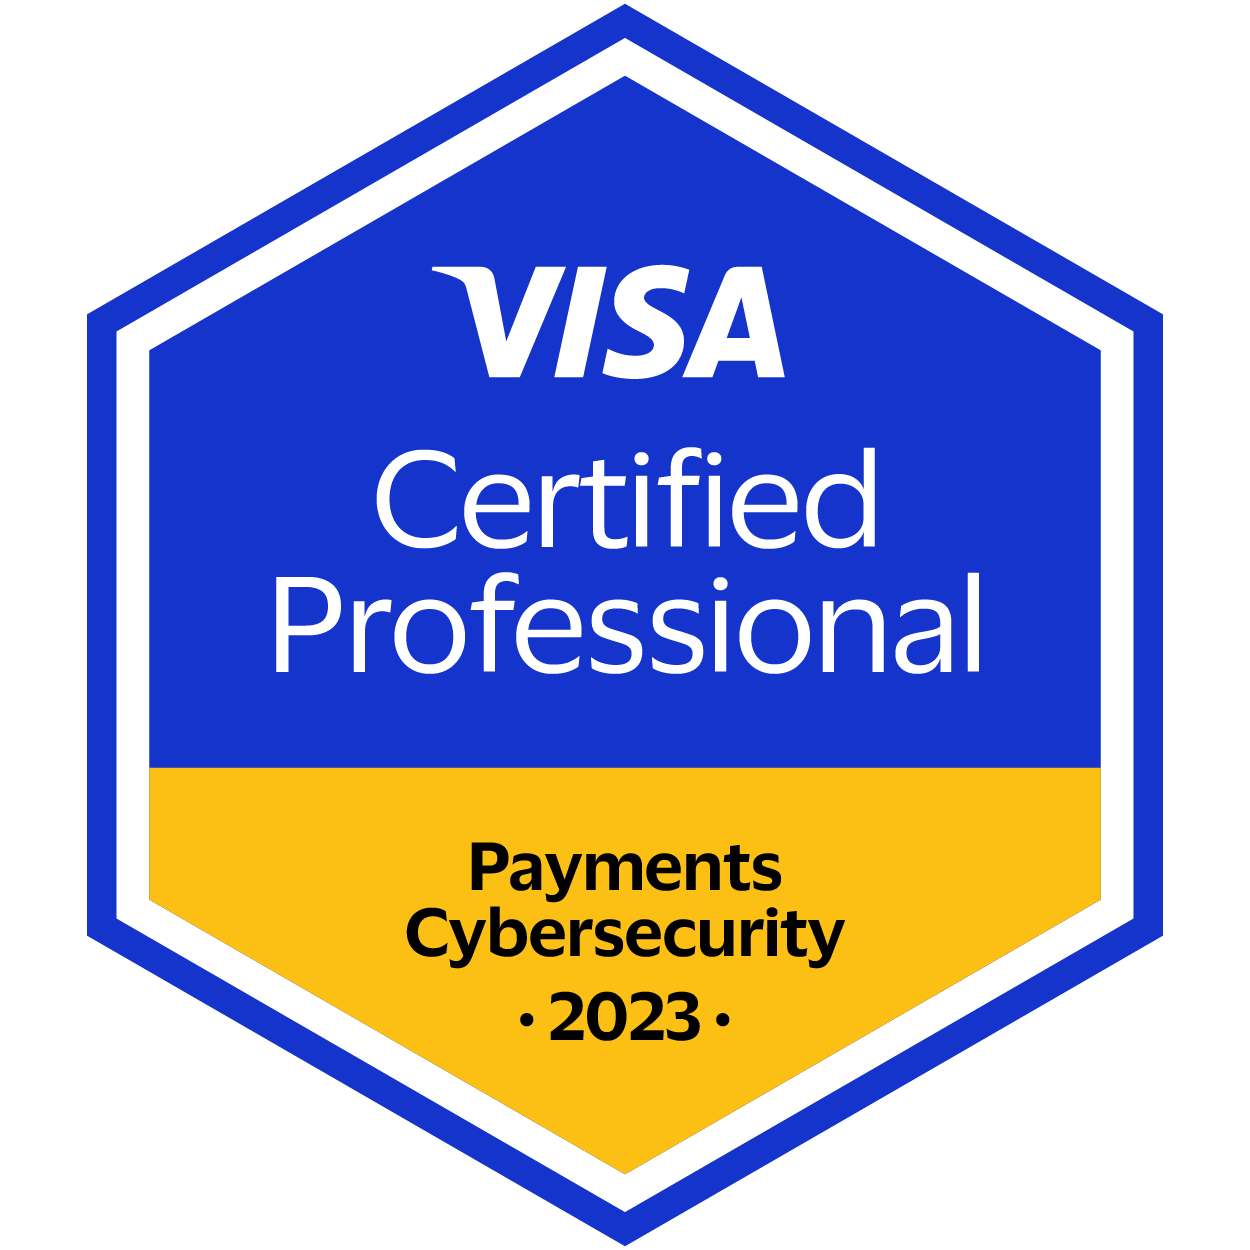 Visa Certified Professional